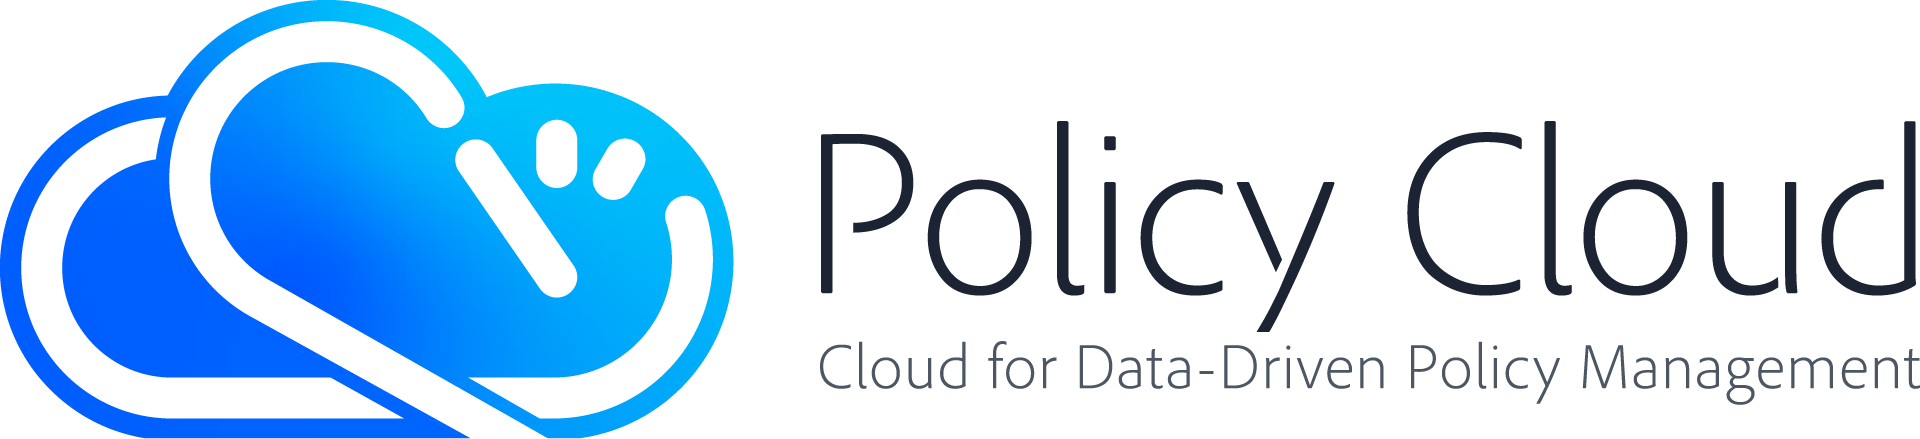 Policy Cloud logo